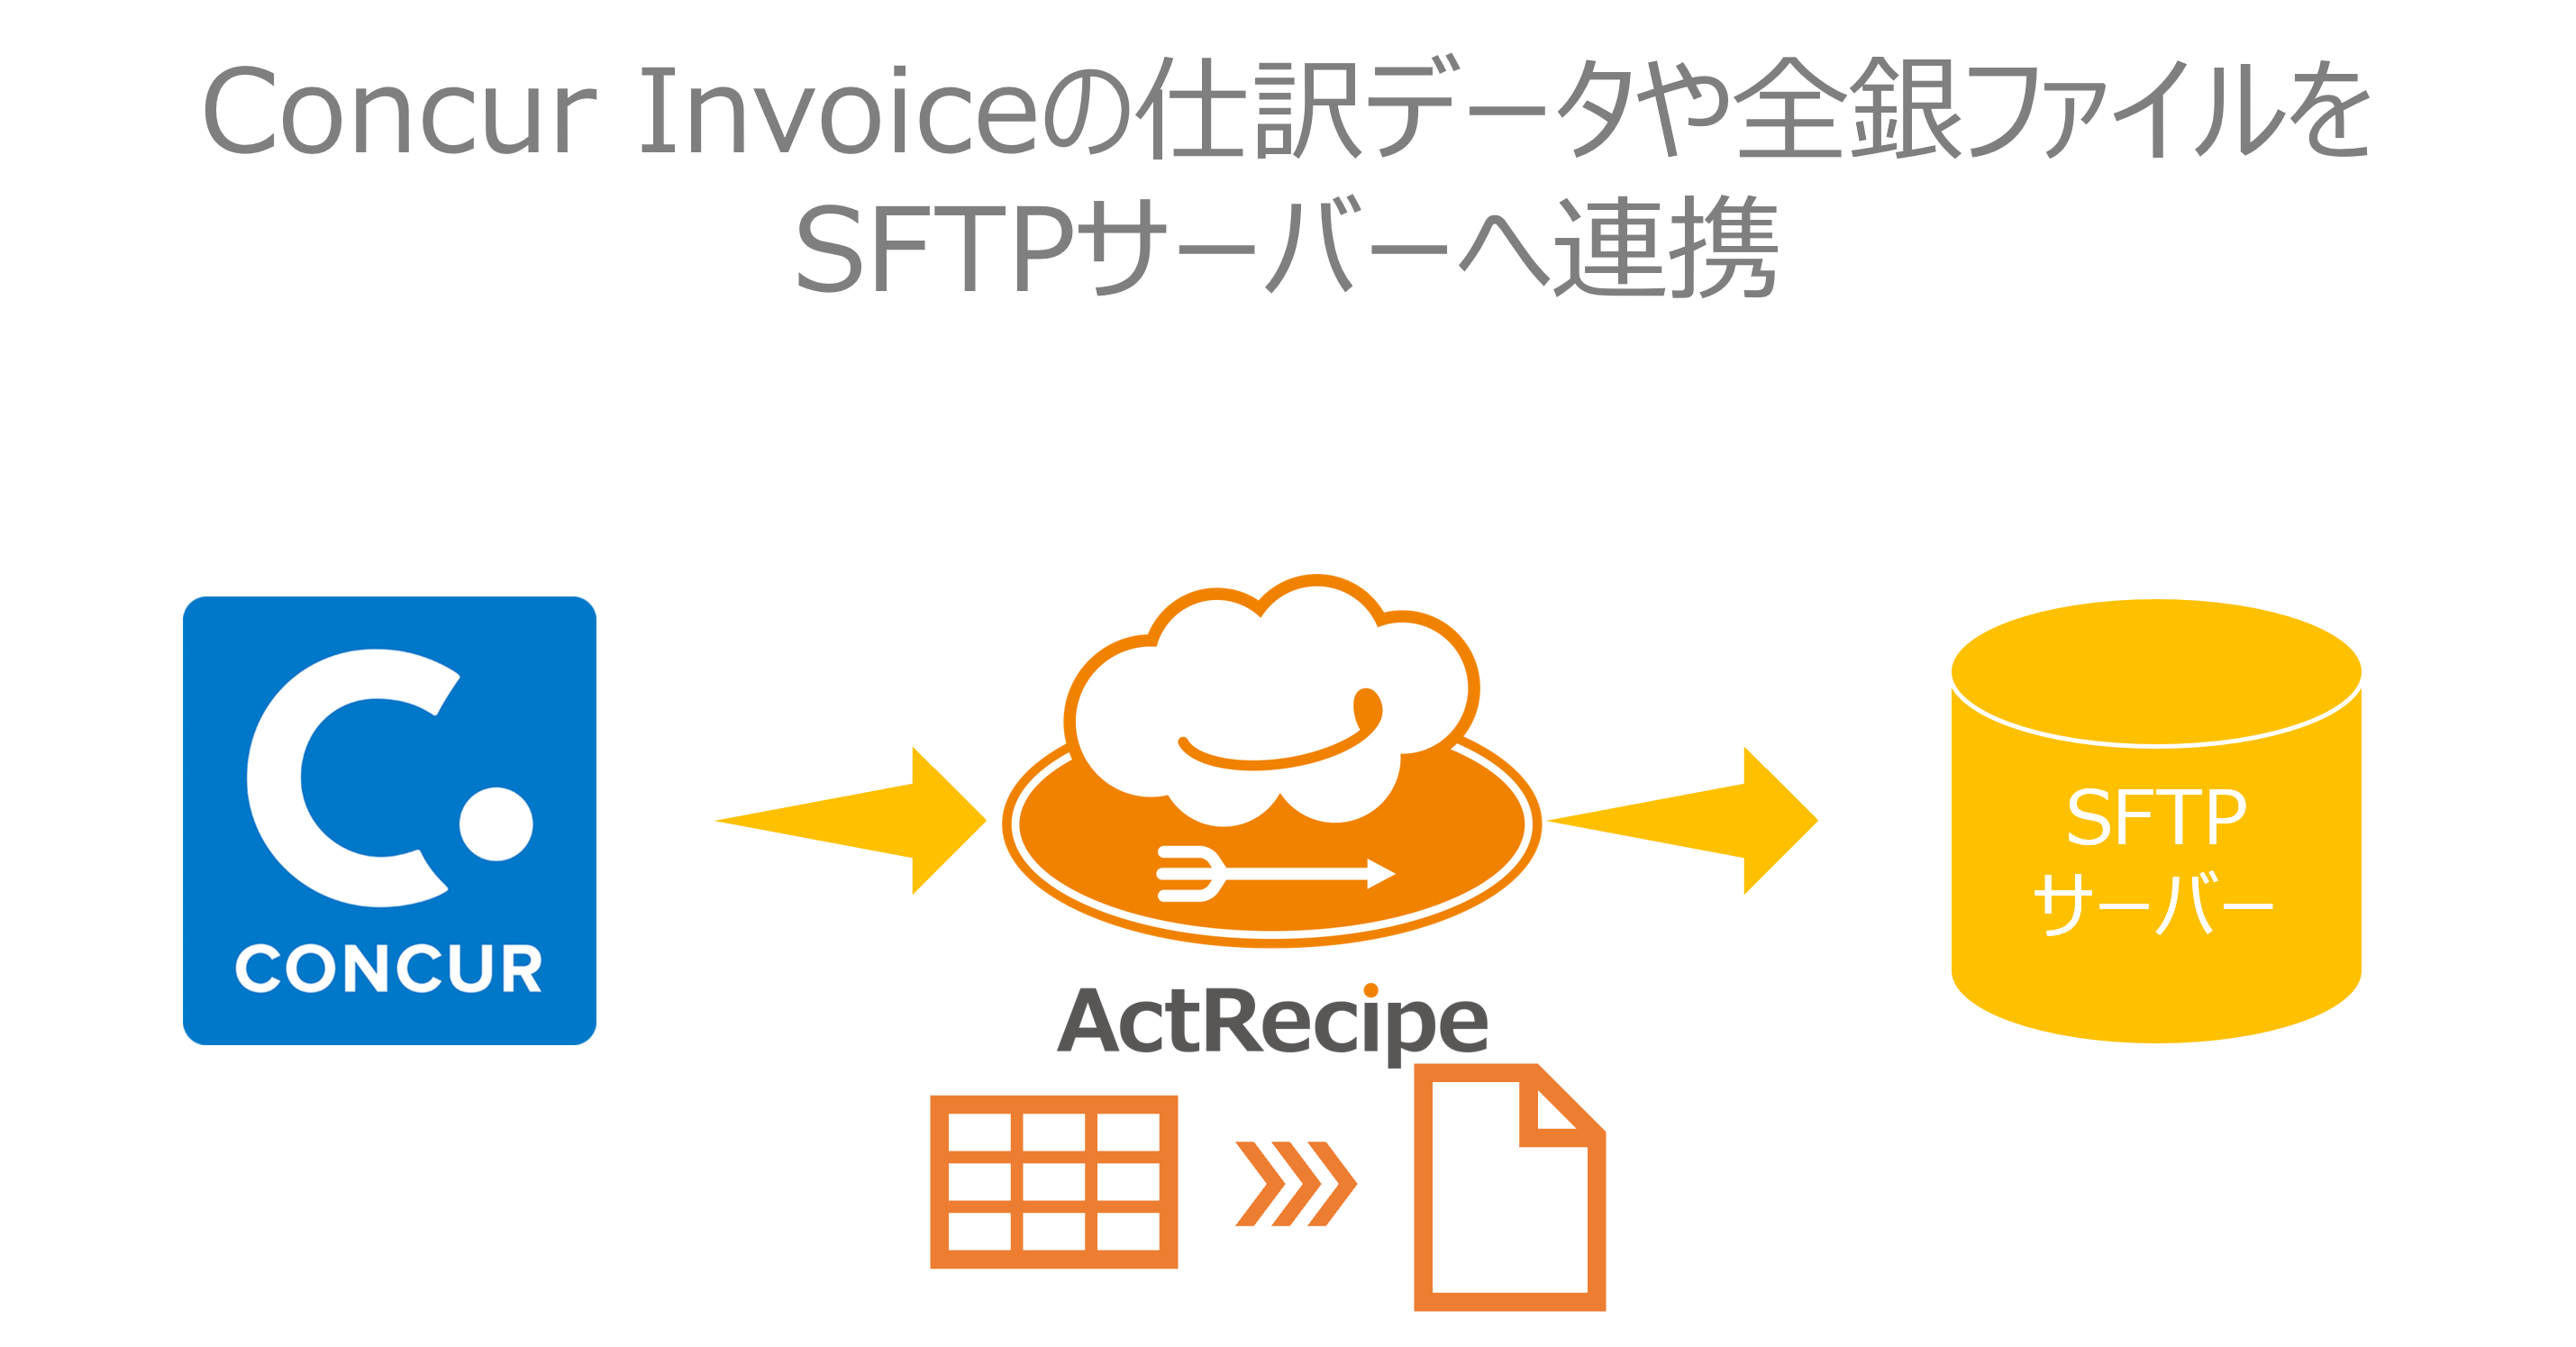 Concur_Invoice______________SFTP_______.png